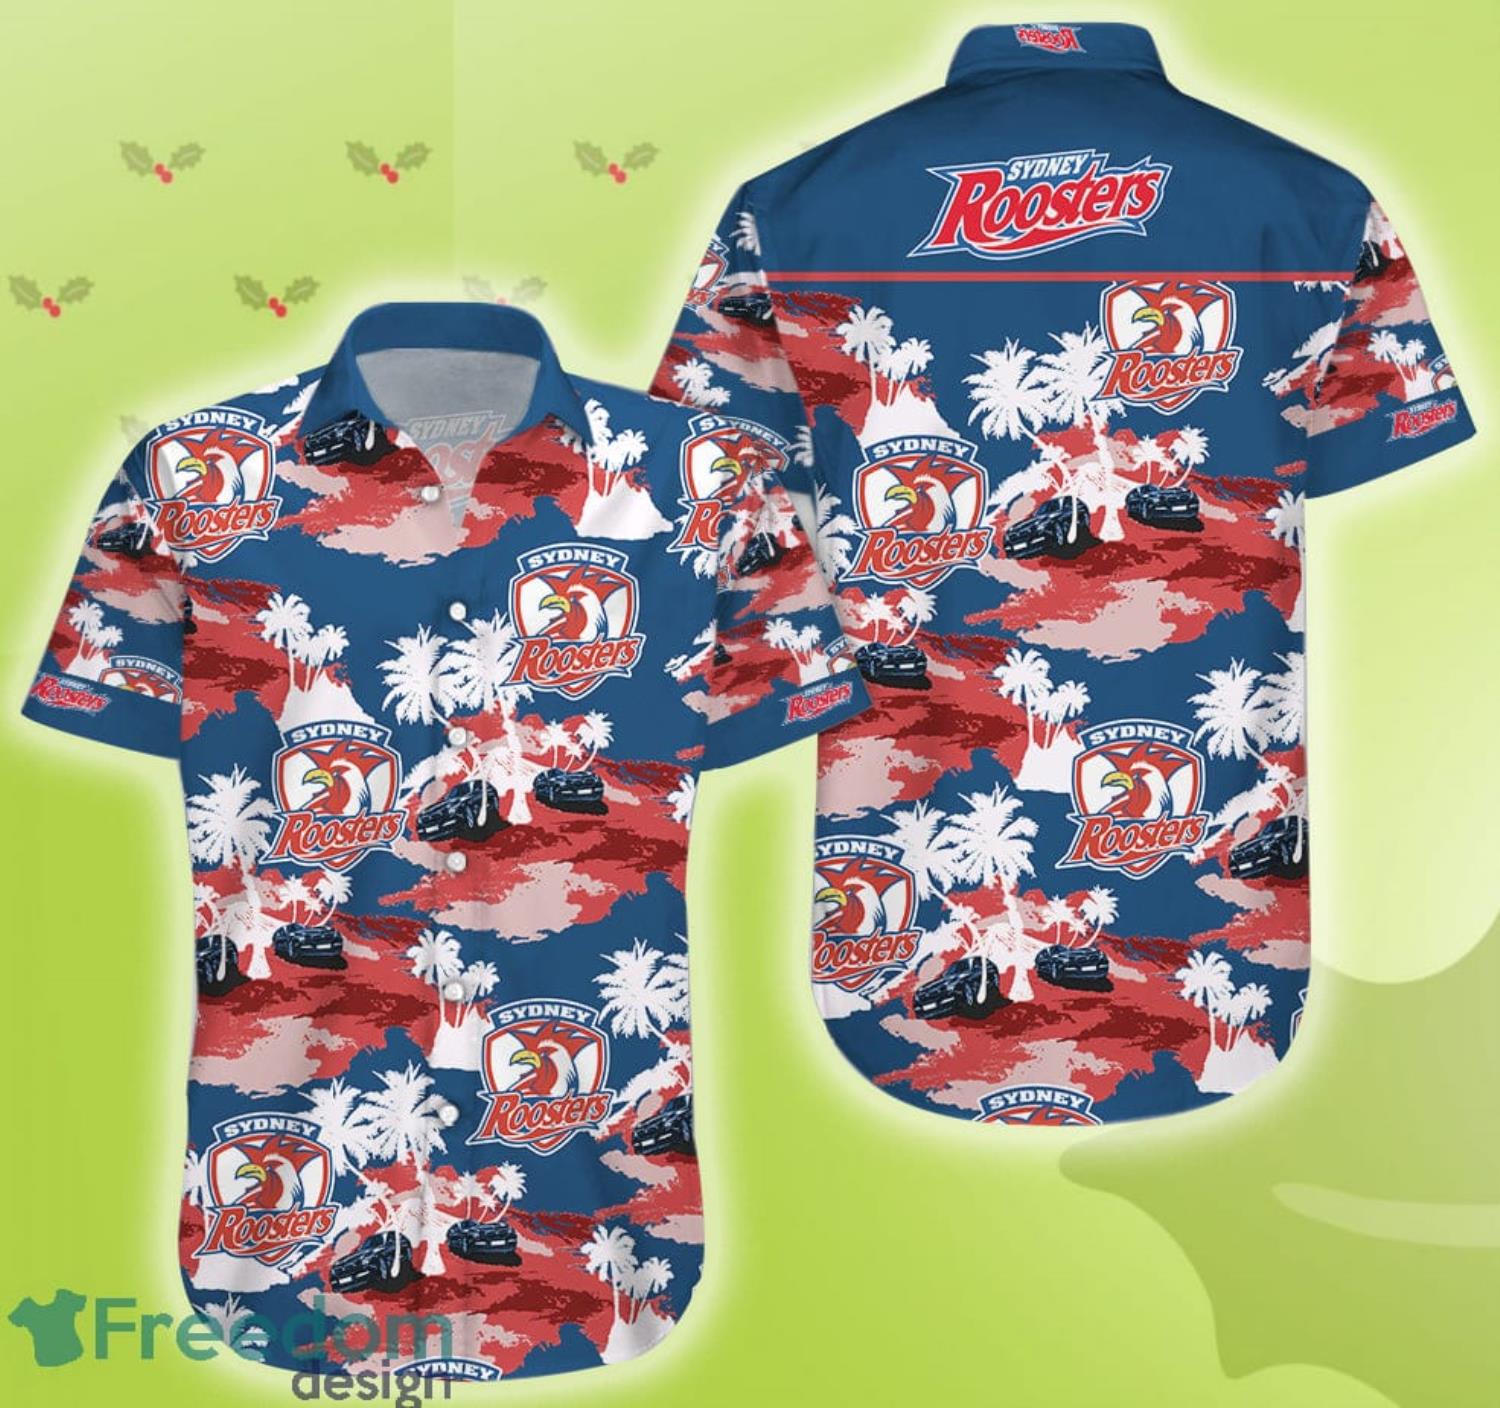 Colorado Rockies MLB Flower Hawaiian Shirt Best Gift Idea For Fans -  Freedomdesign